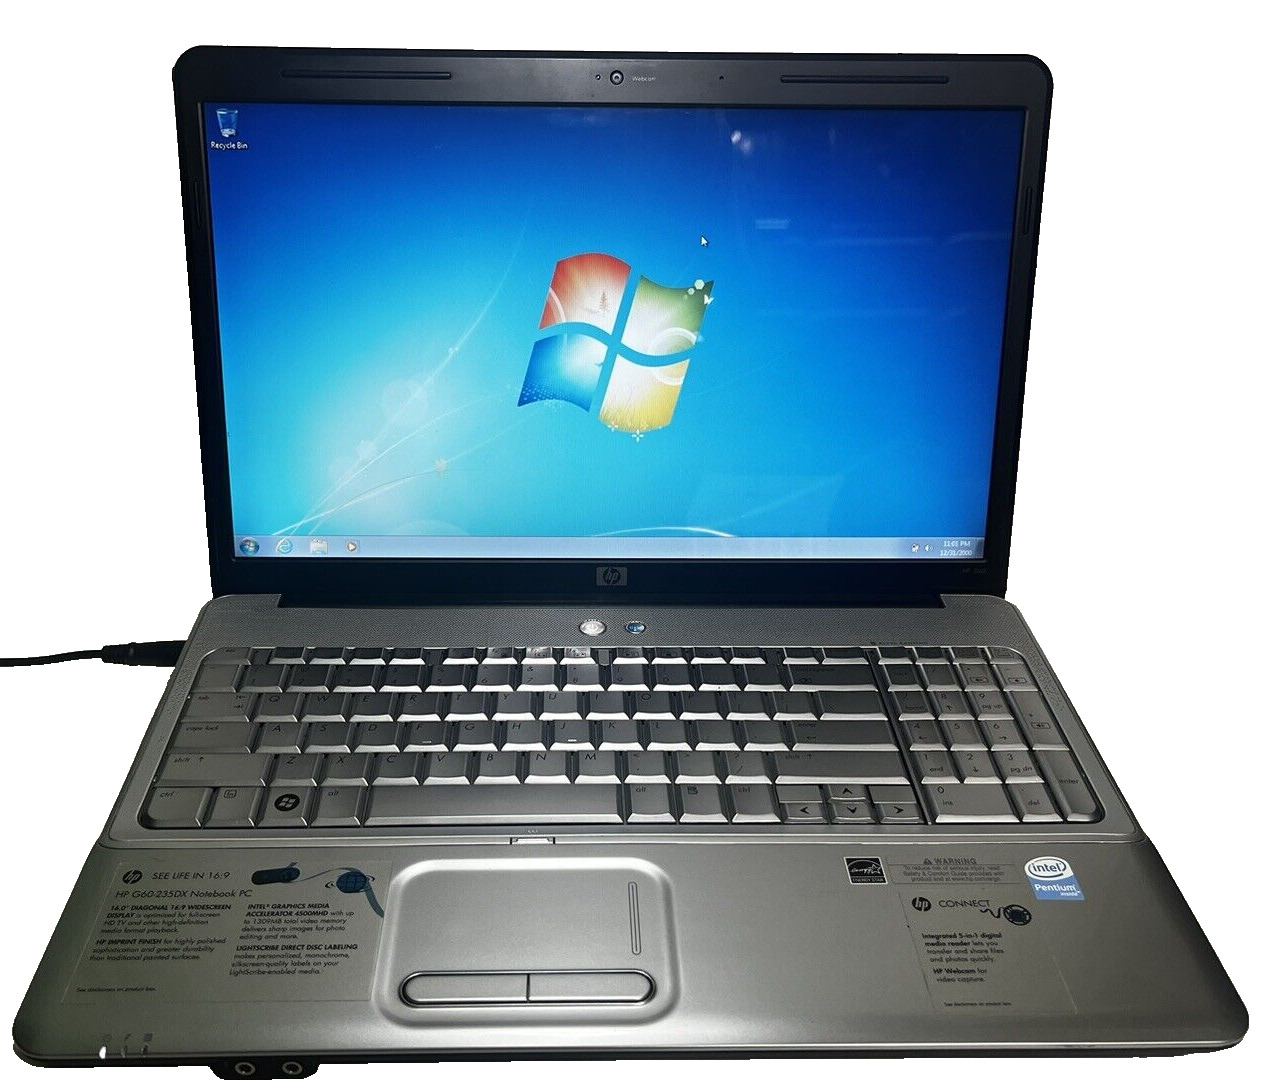 Hp G60-235DX Laptop Intel Pentium T4200 2.00GHz 4GB RAM 750GB HDD Windows 7